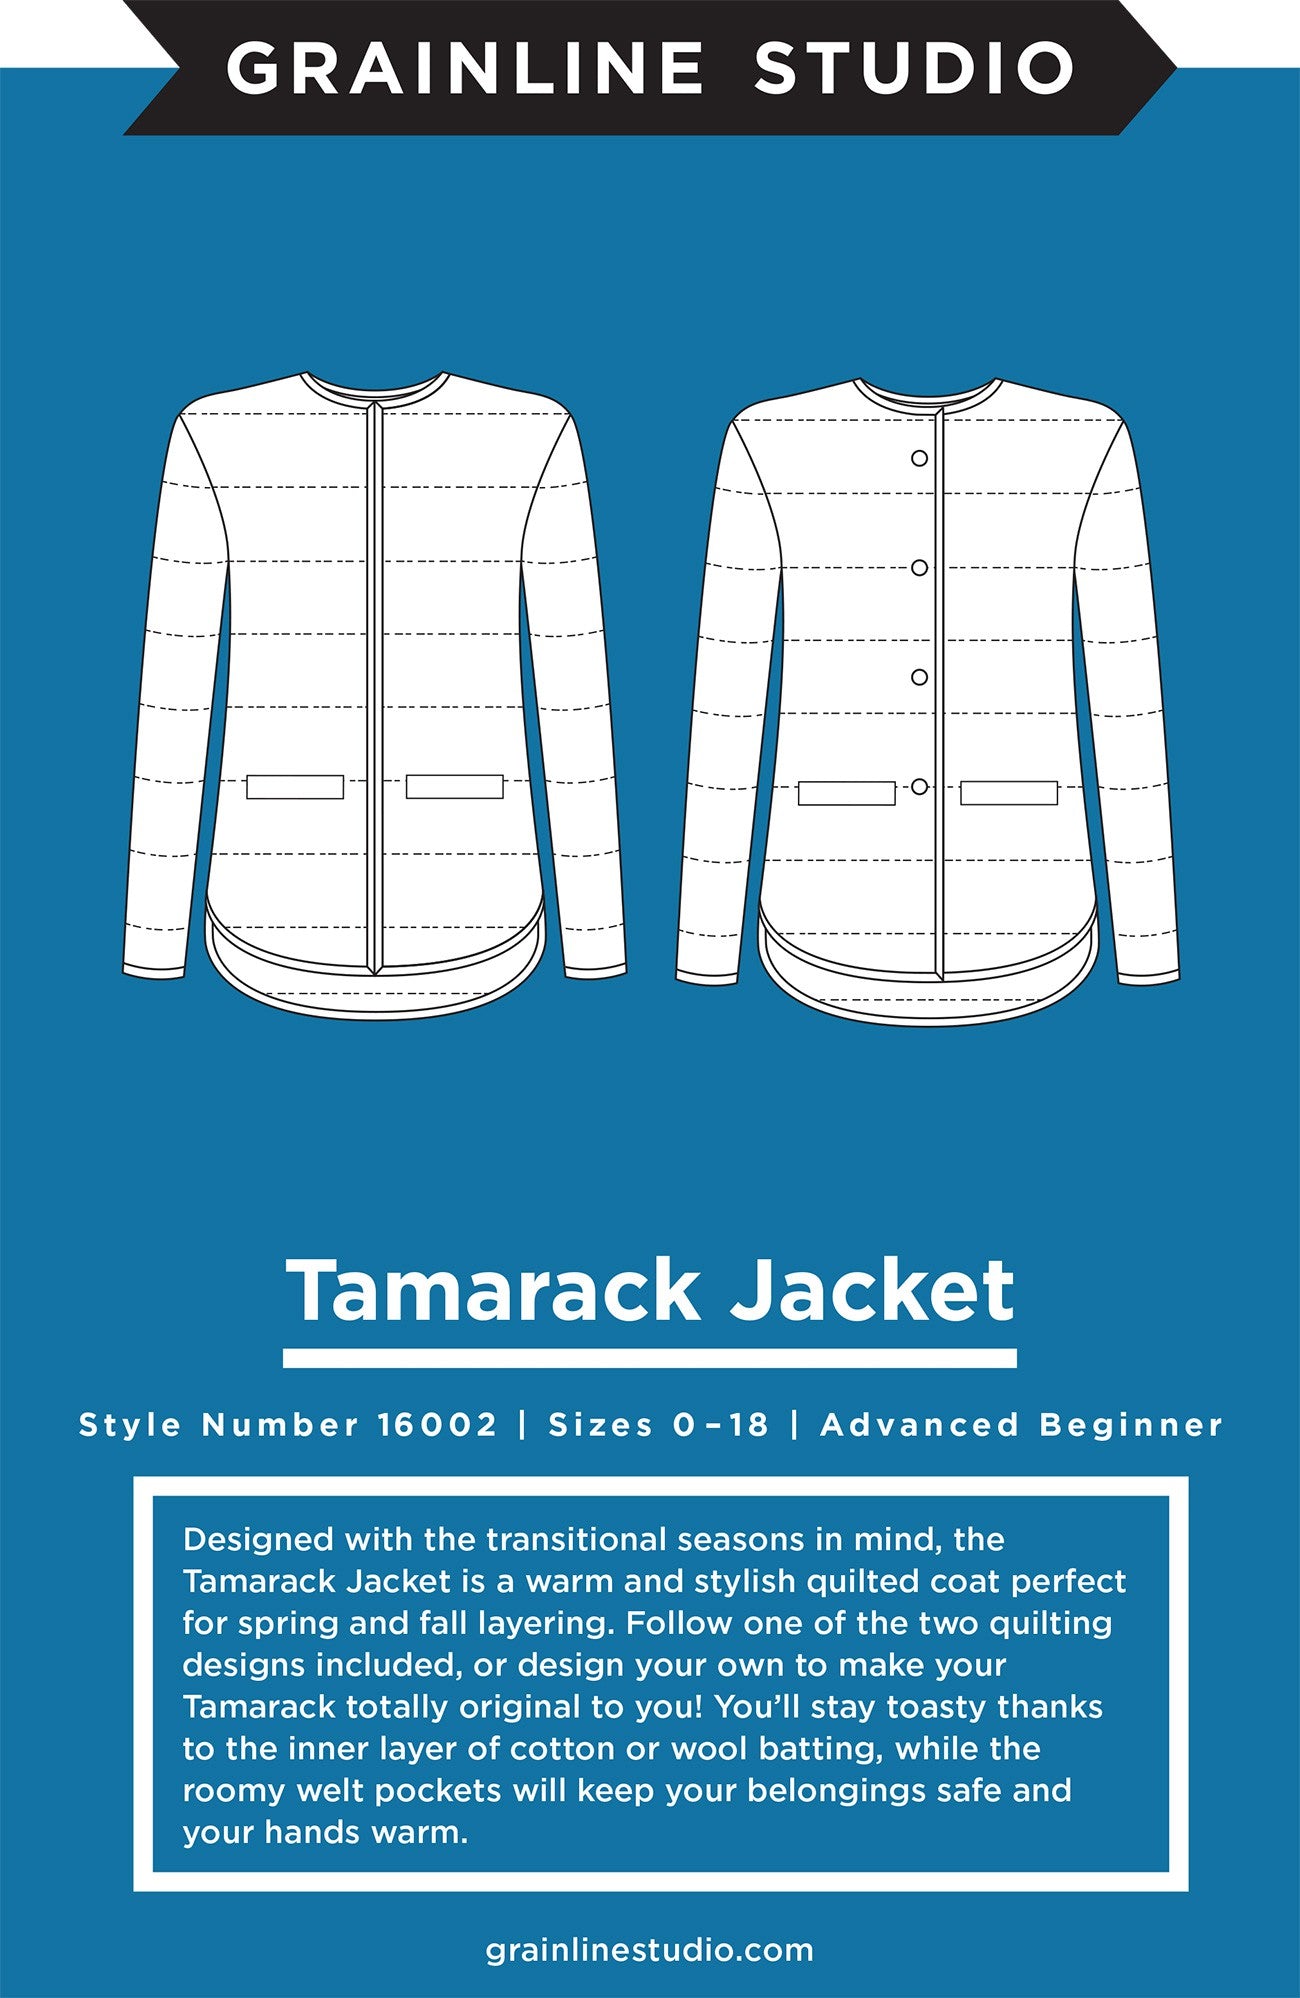 Tamarack Jacket Sizes 0 - 18 Advanced Beginner Sewing Pattern by Jen Beeman of Grainline Studio